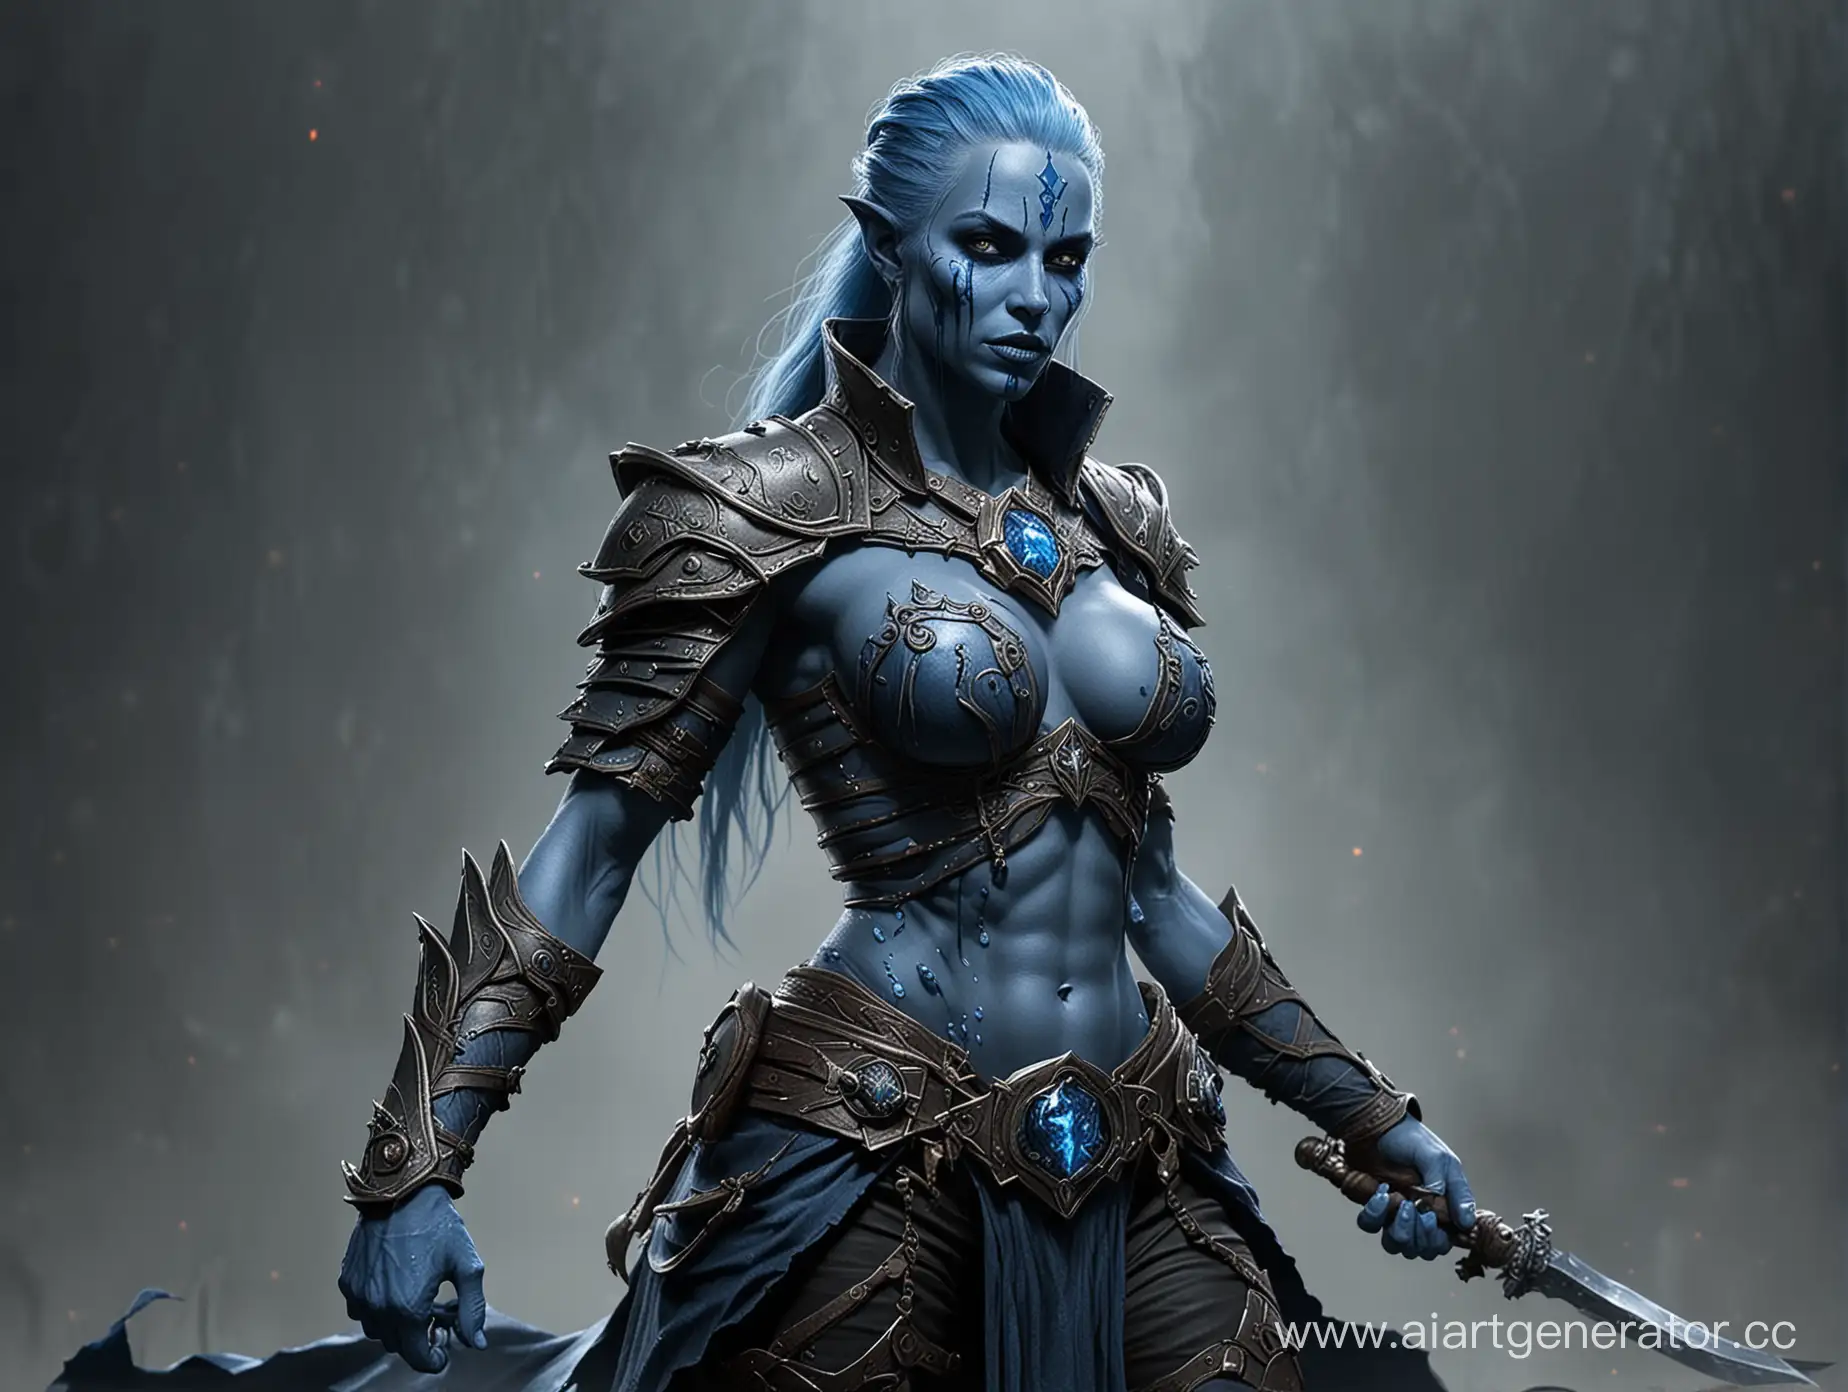 Vedalken with blue skin, D&D, dark fantasy, magic